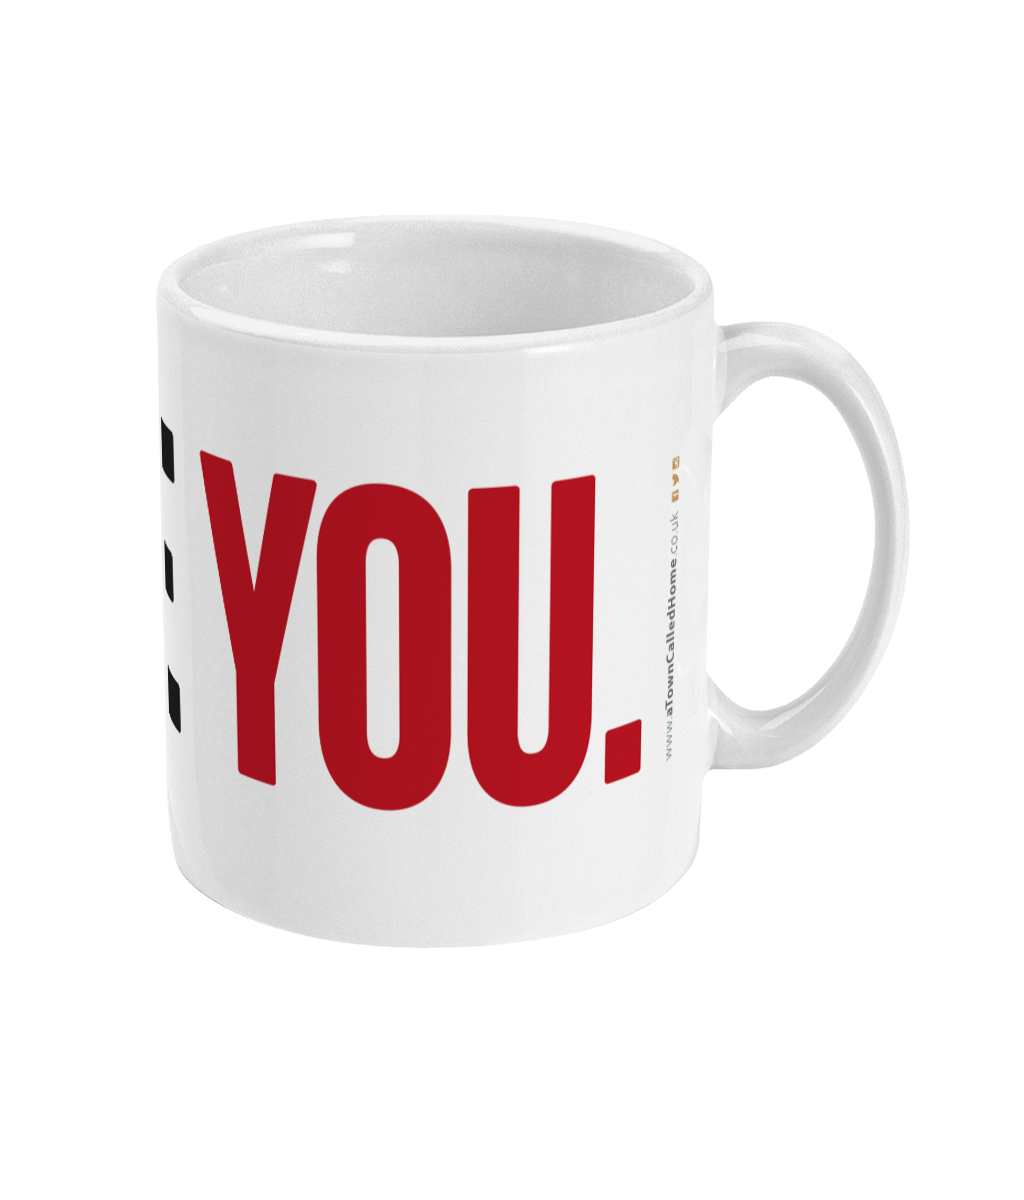 I love you mug / cup